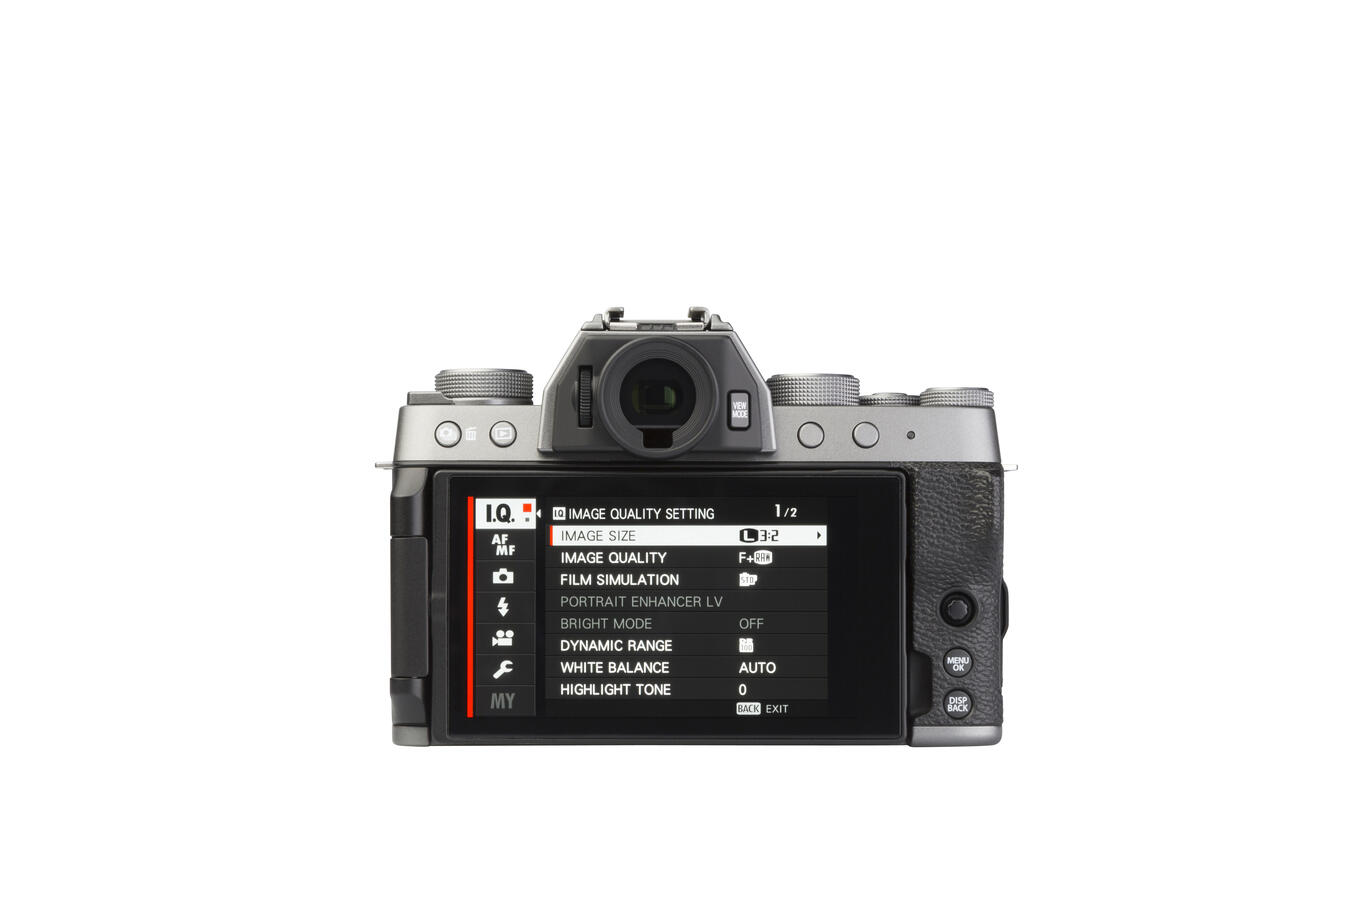 X-T200 + FUJINON SUPER EBC XC 15-45mm 1:3.5-5.6 OIS PZ Fujifilm